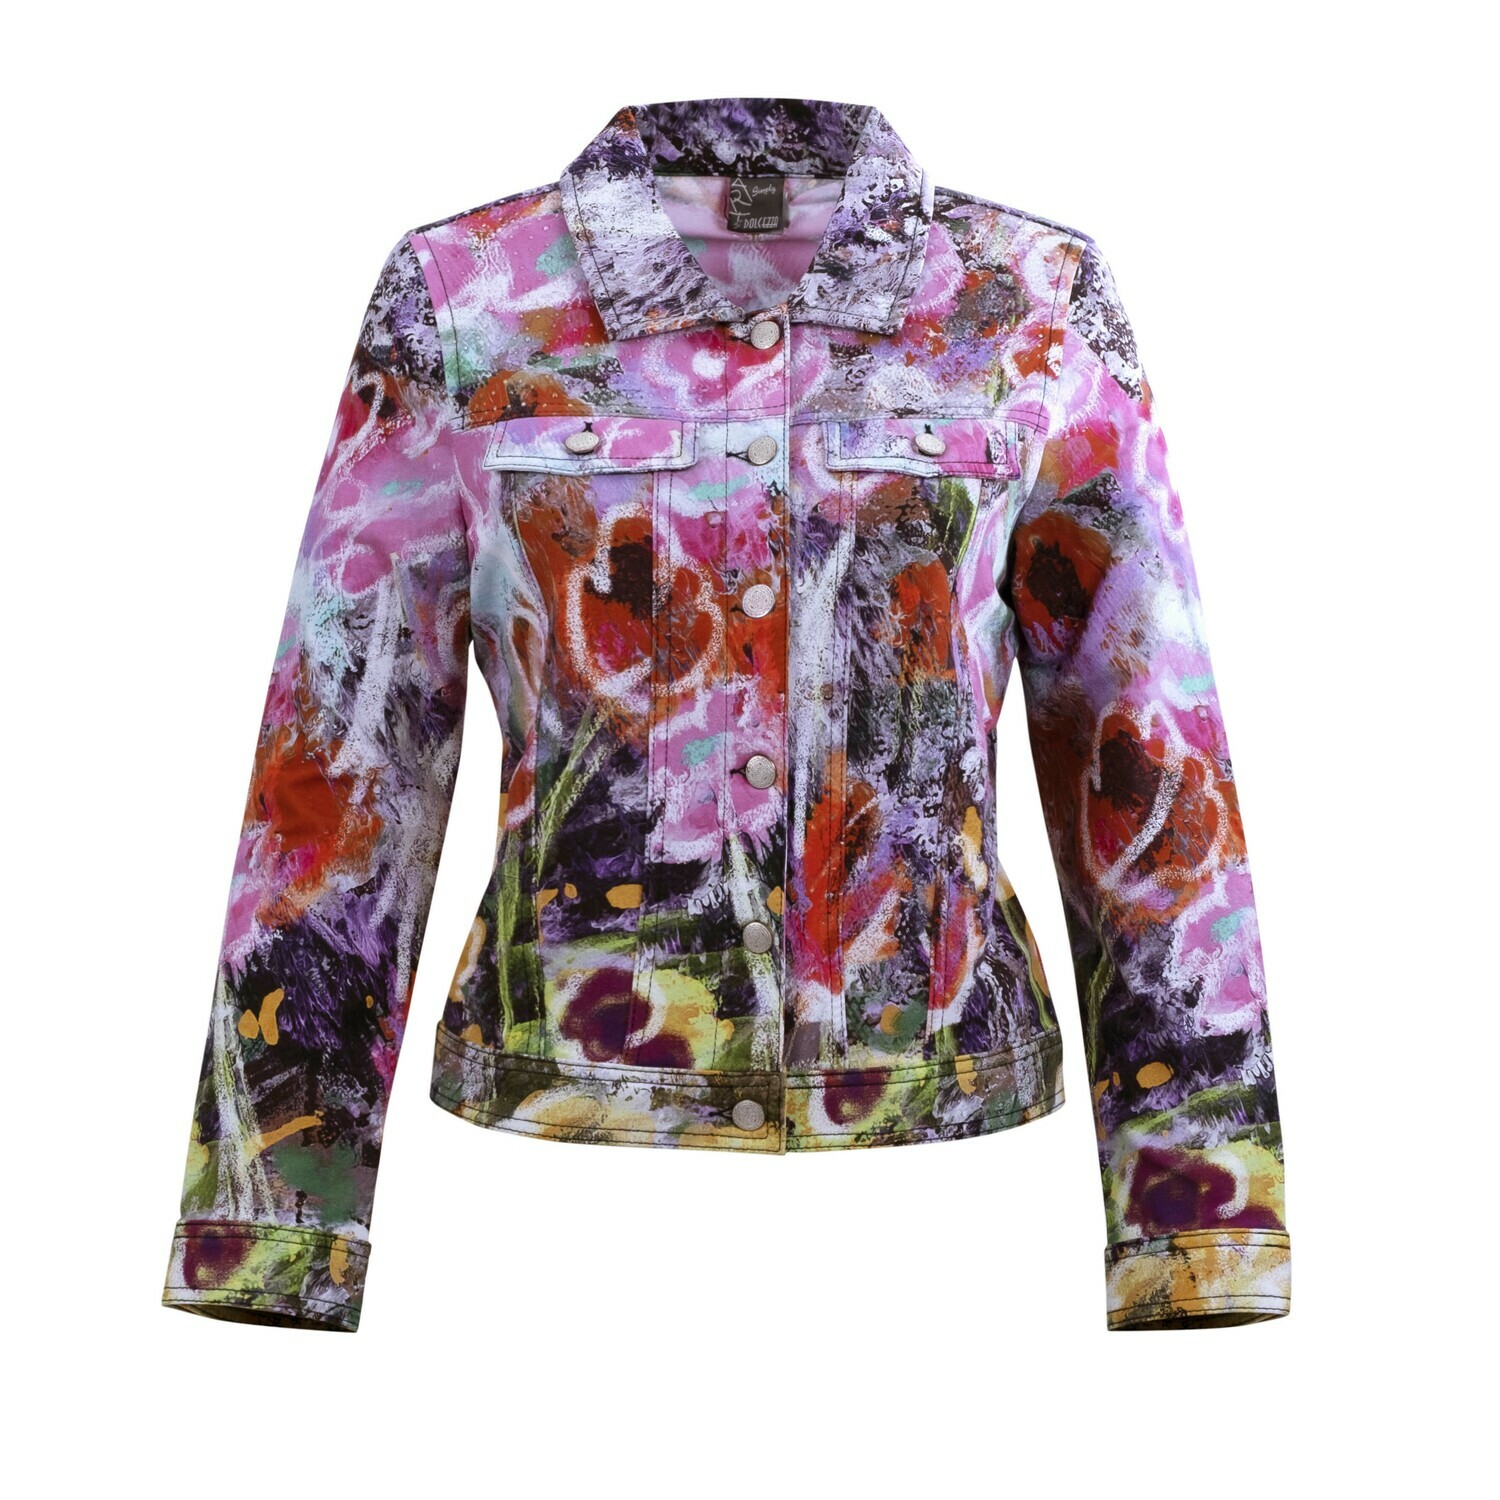 Simply Art Dolcezza: Wildest Flowers Abstract Art Denim Jacket